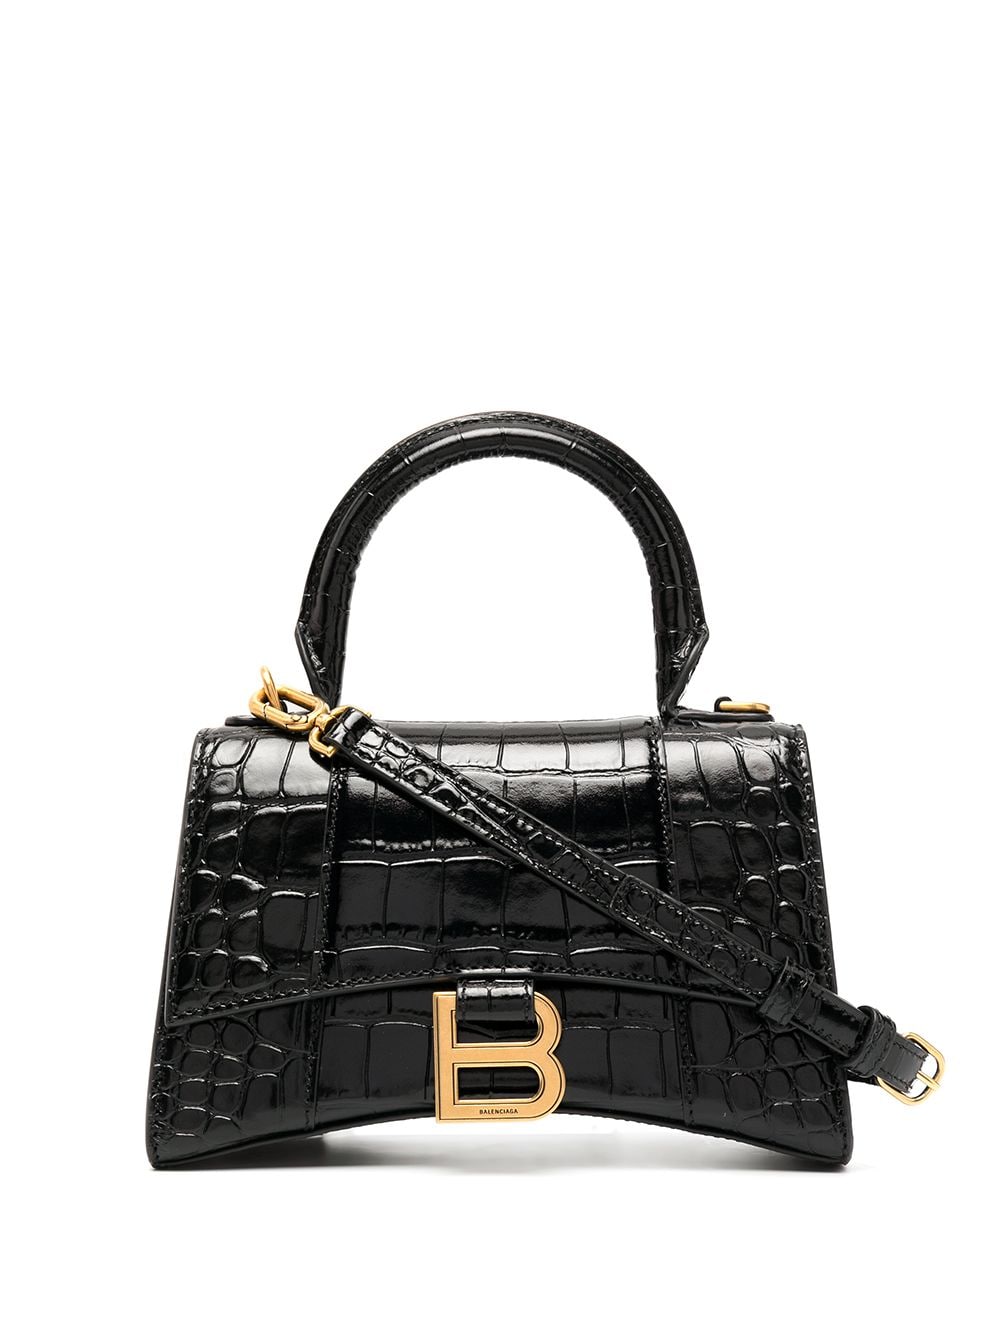 Shop Balenciaga Black Leather Hourglass Top-handle Tote Handbag For Women